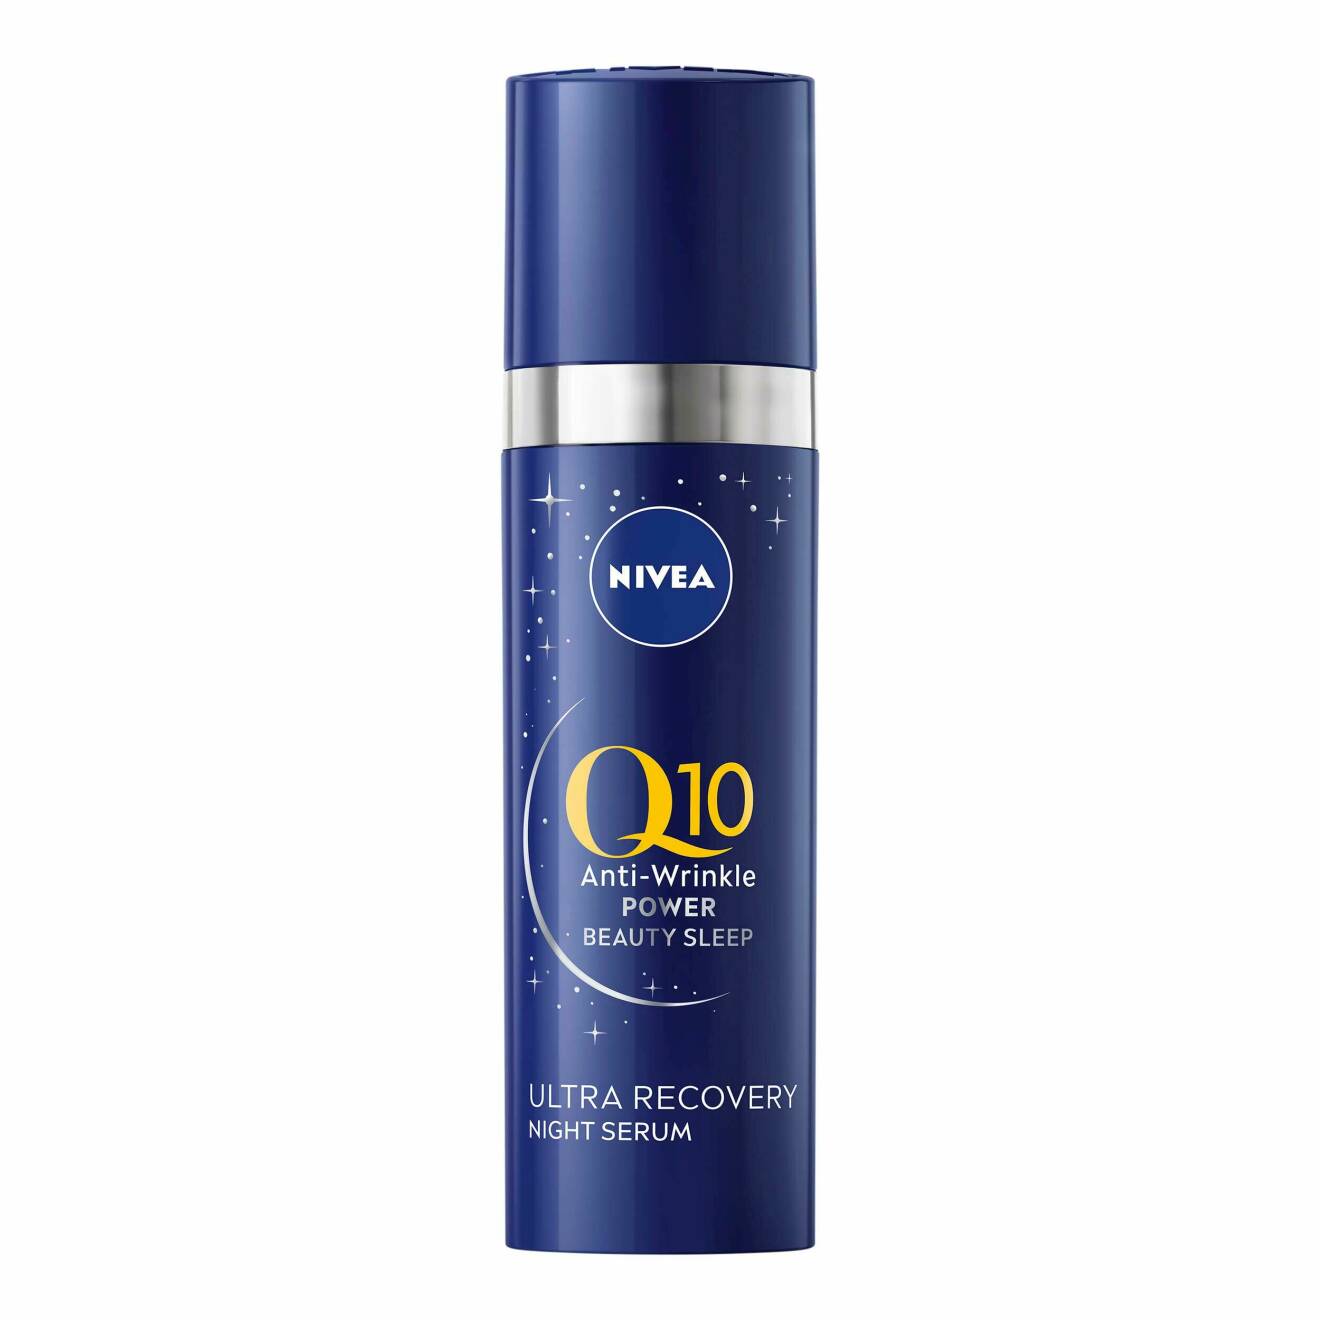 Q10 Anti-Wrinkle Power Beauty Sleep från Nivea.